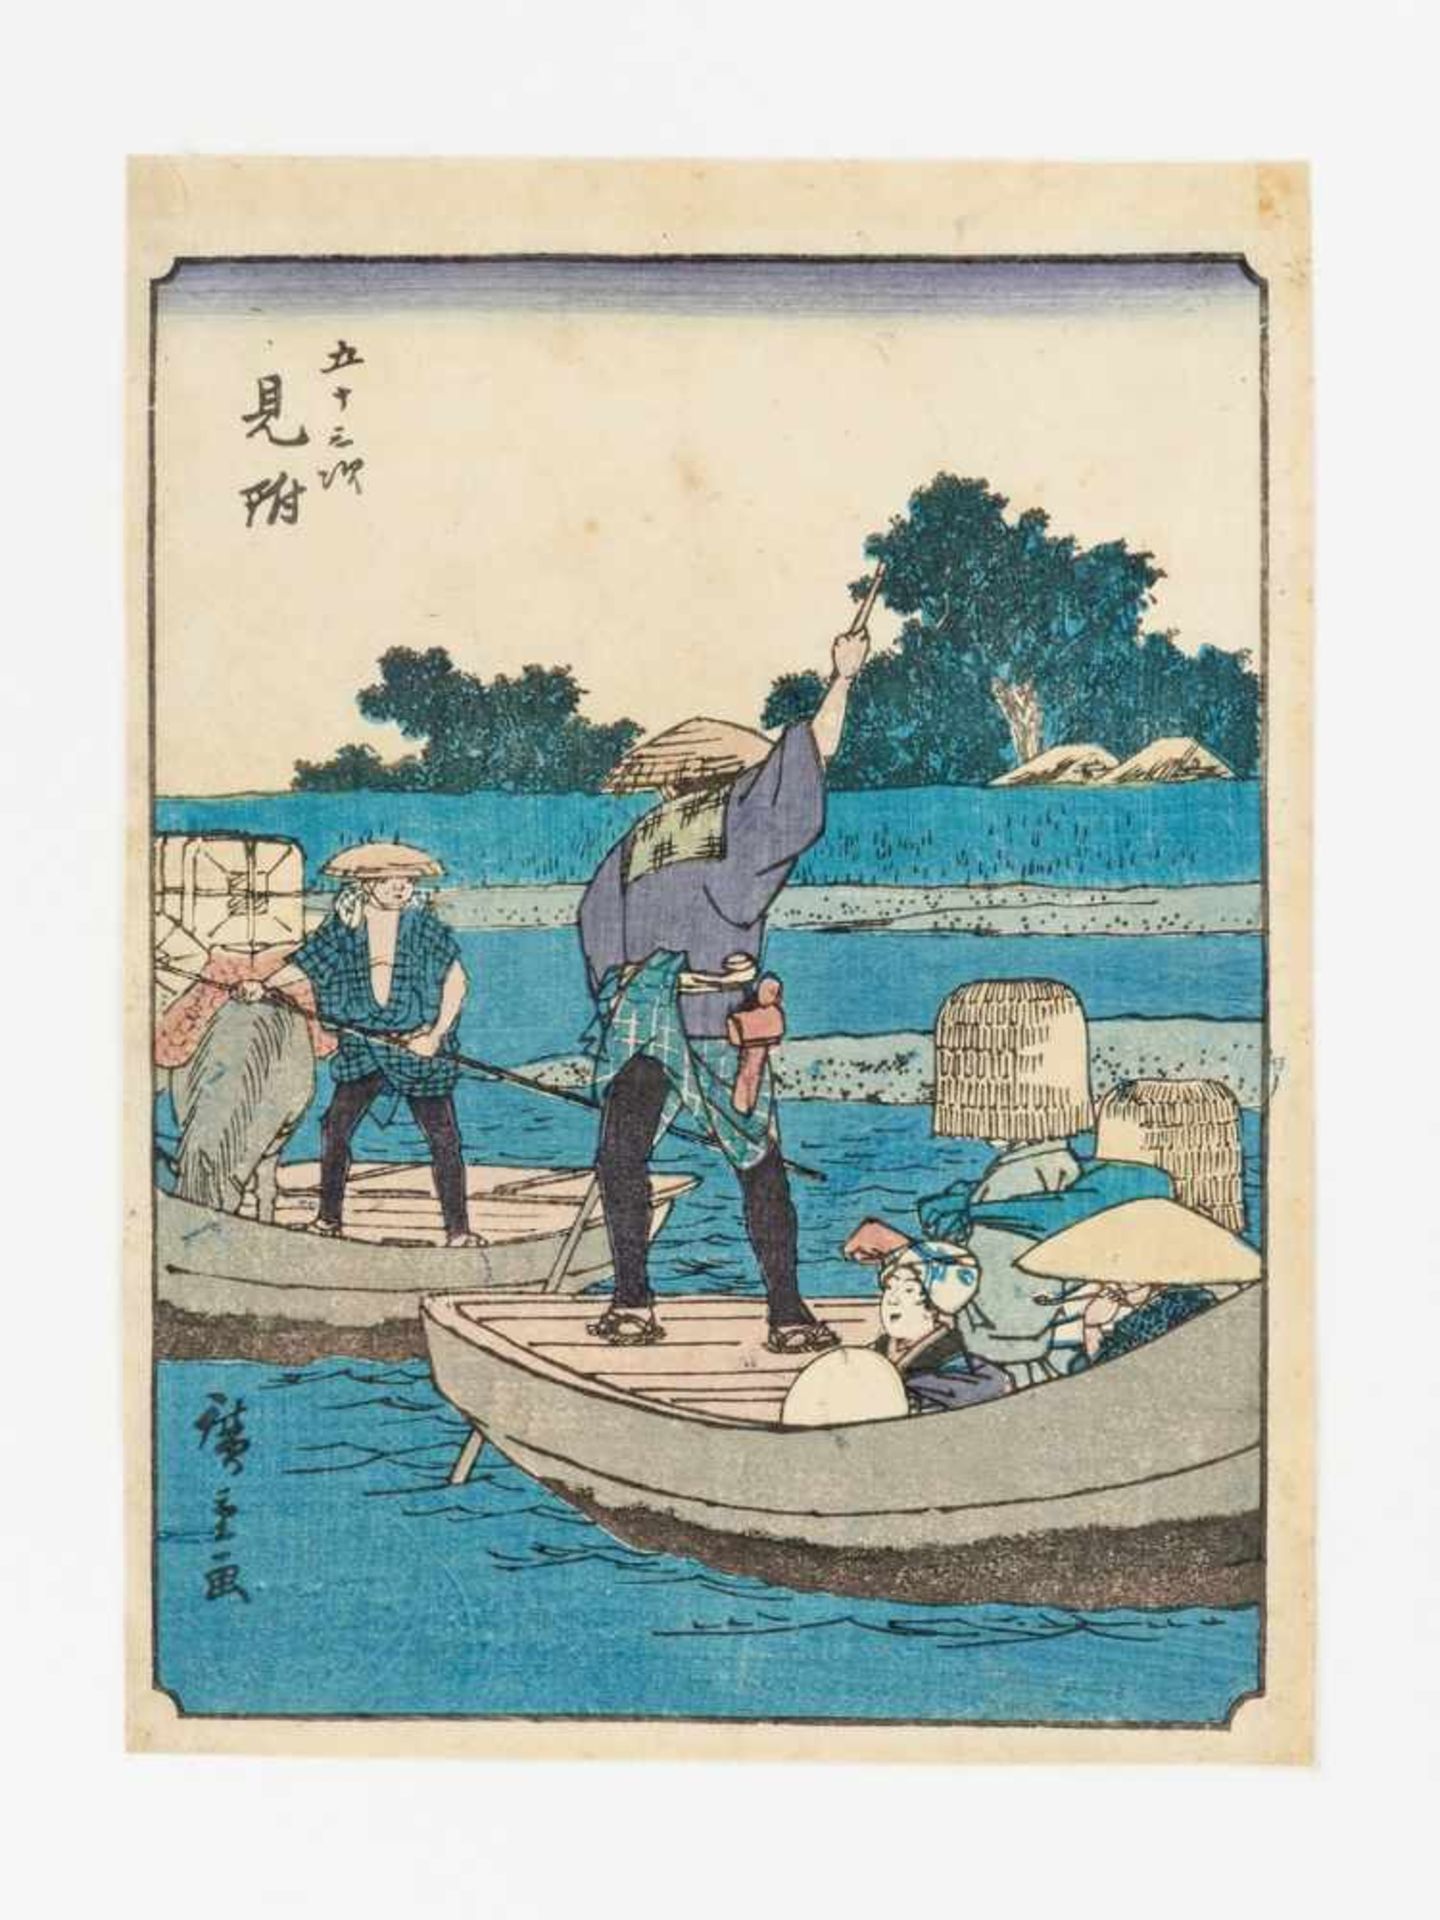 UTAGAWA HIROSHIGE: A COLOR WOODBLOCK PRINT OF MITSUKE FROM THE JINBUTSU TOKAIDO By Utagawa Hiroshige